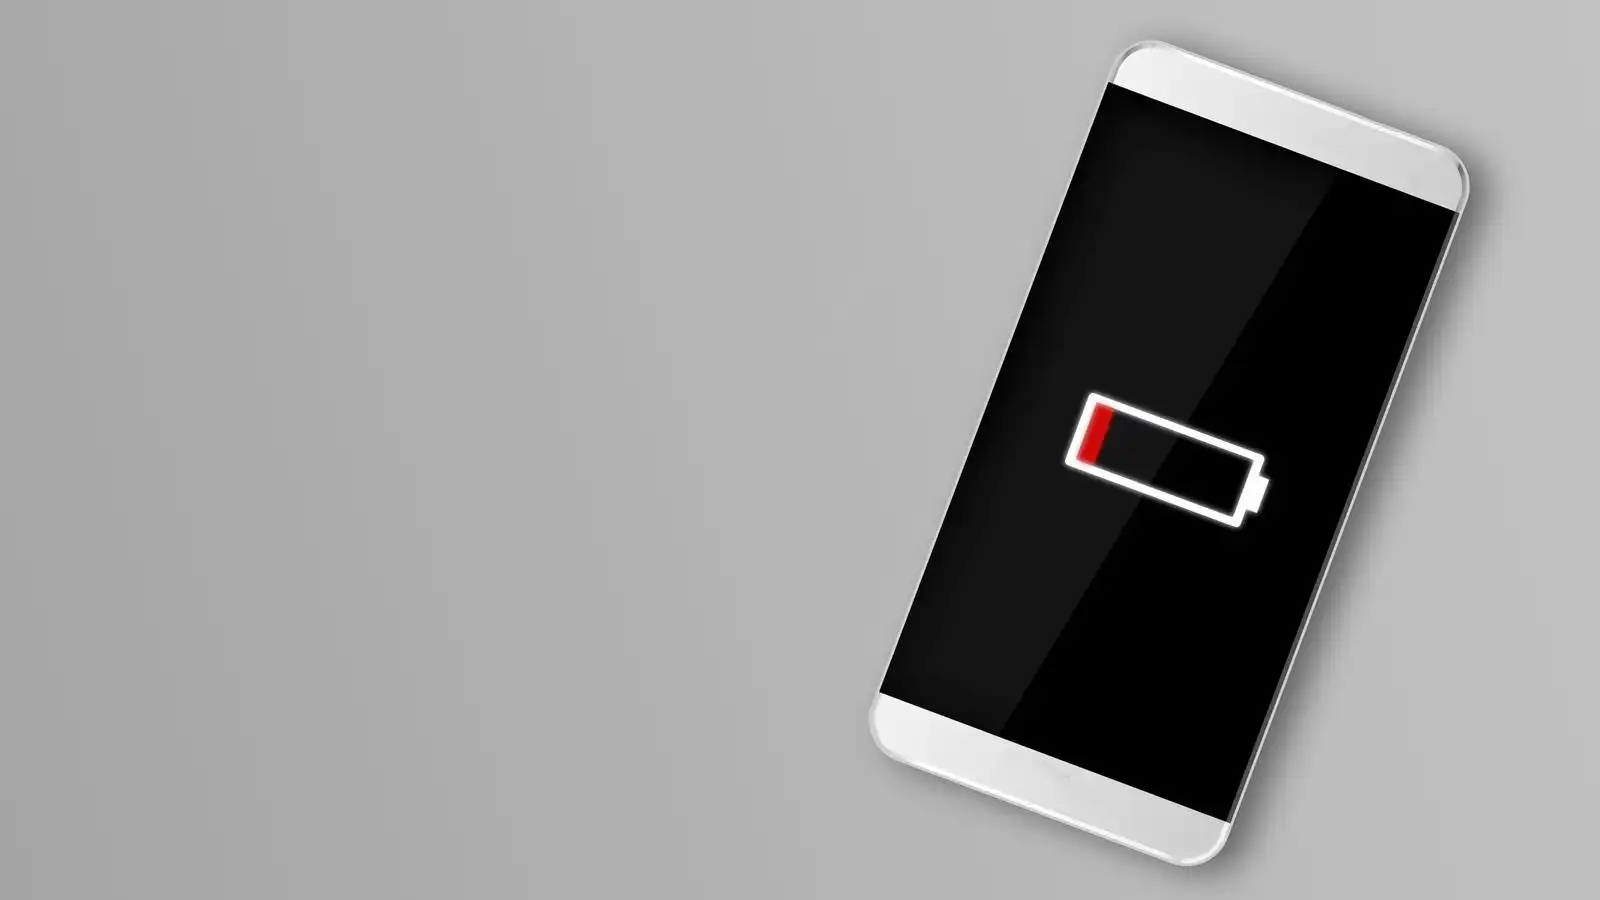 how to properly charge phone battery - افسانه هایی در مورد فناوری که باید فراموش کرد